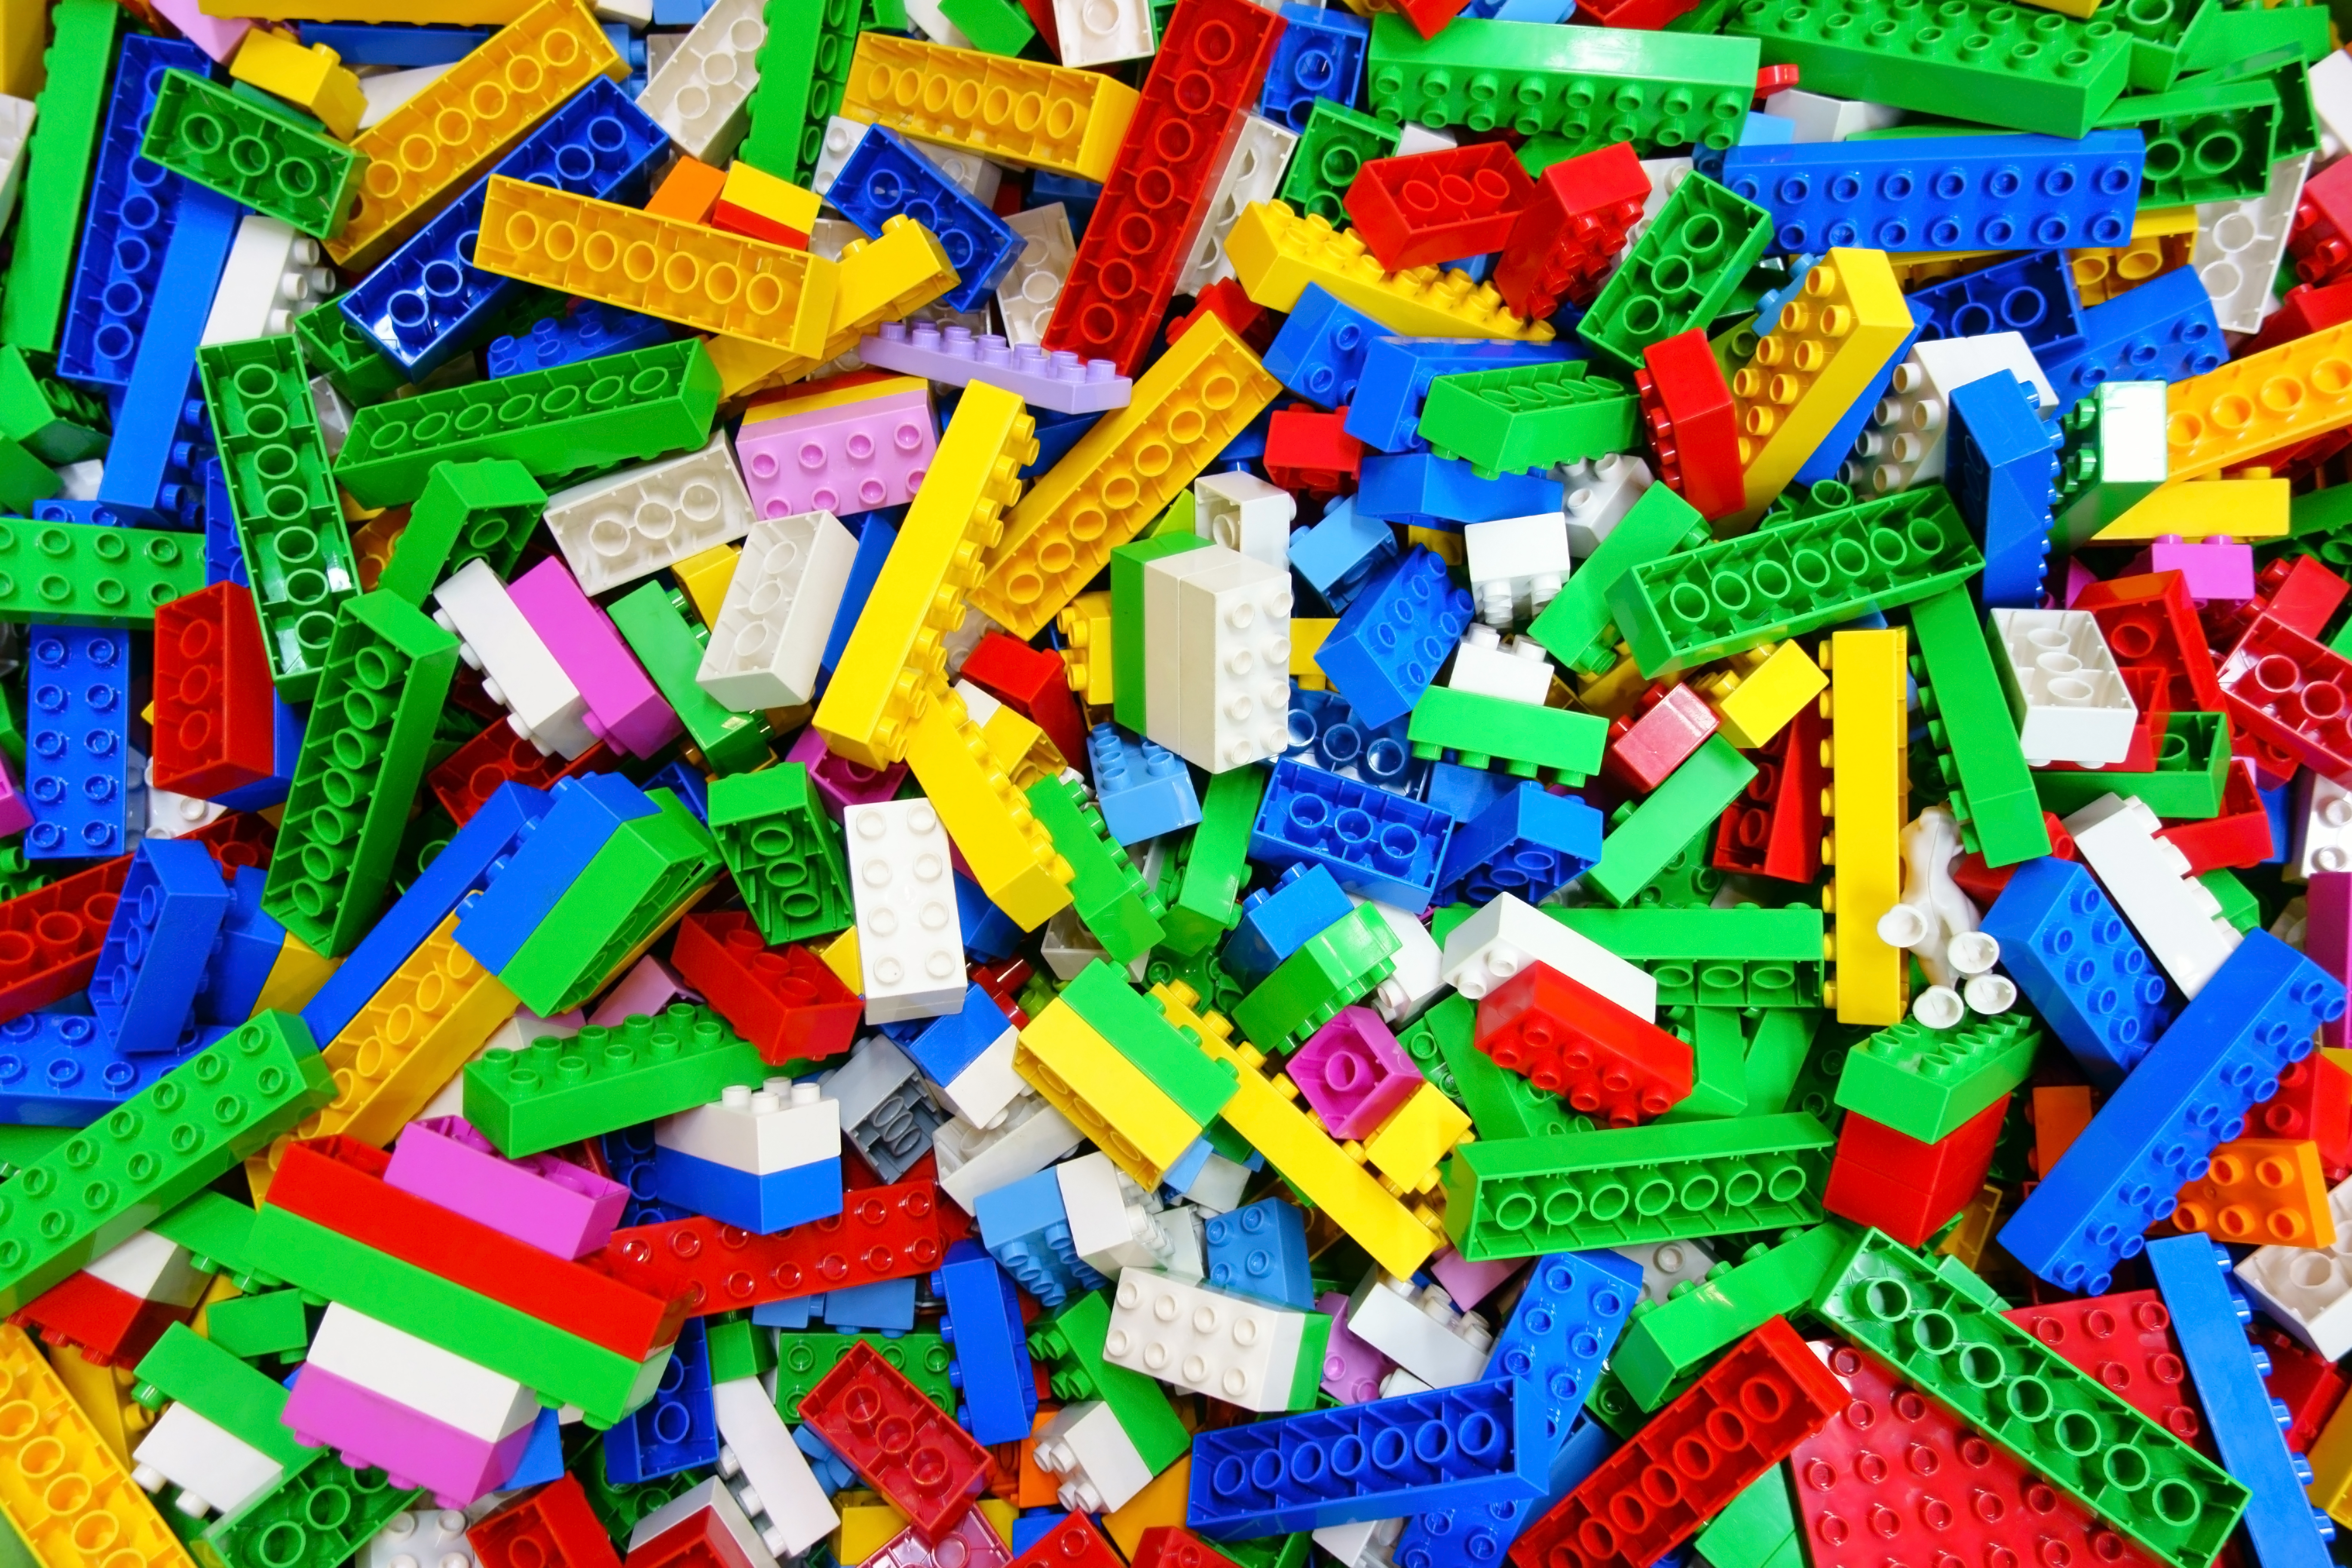 Full screen of lego blocks.